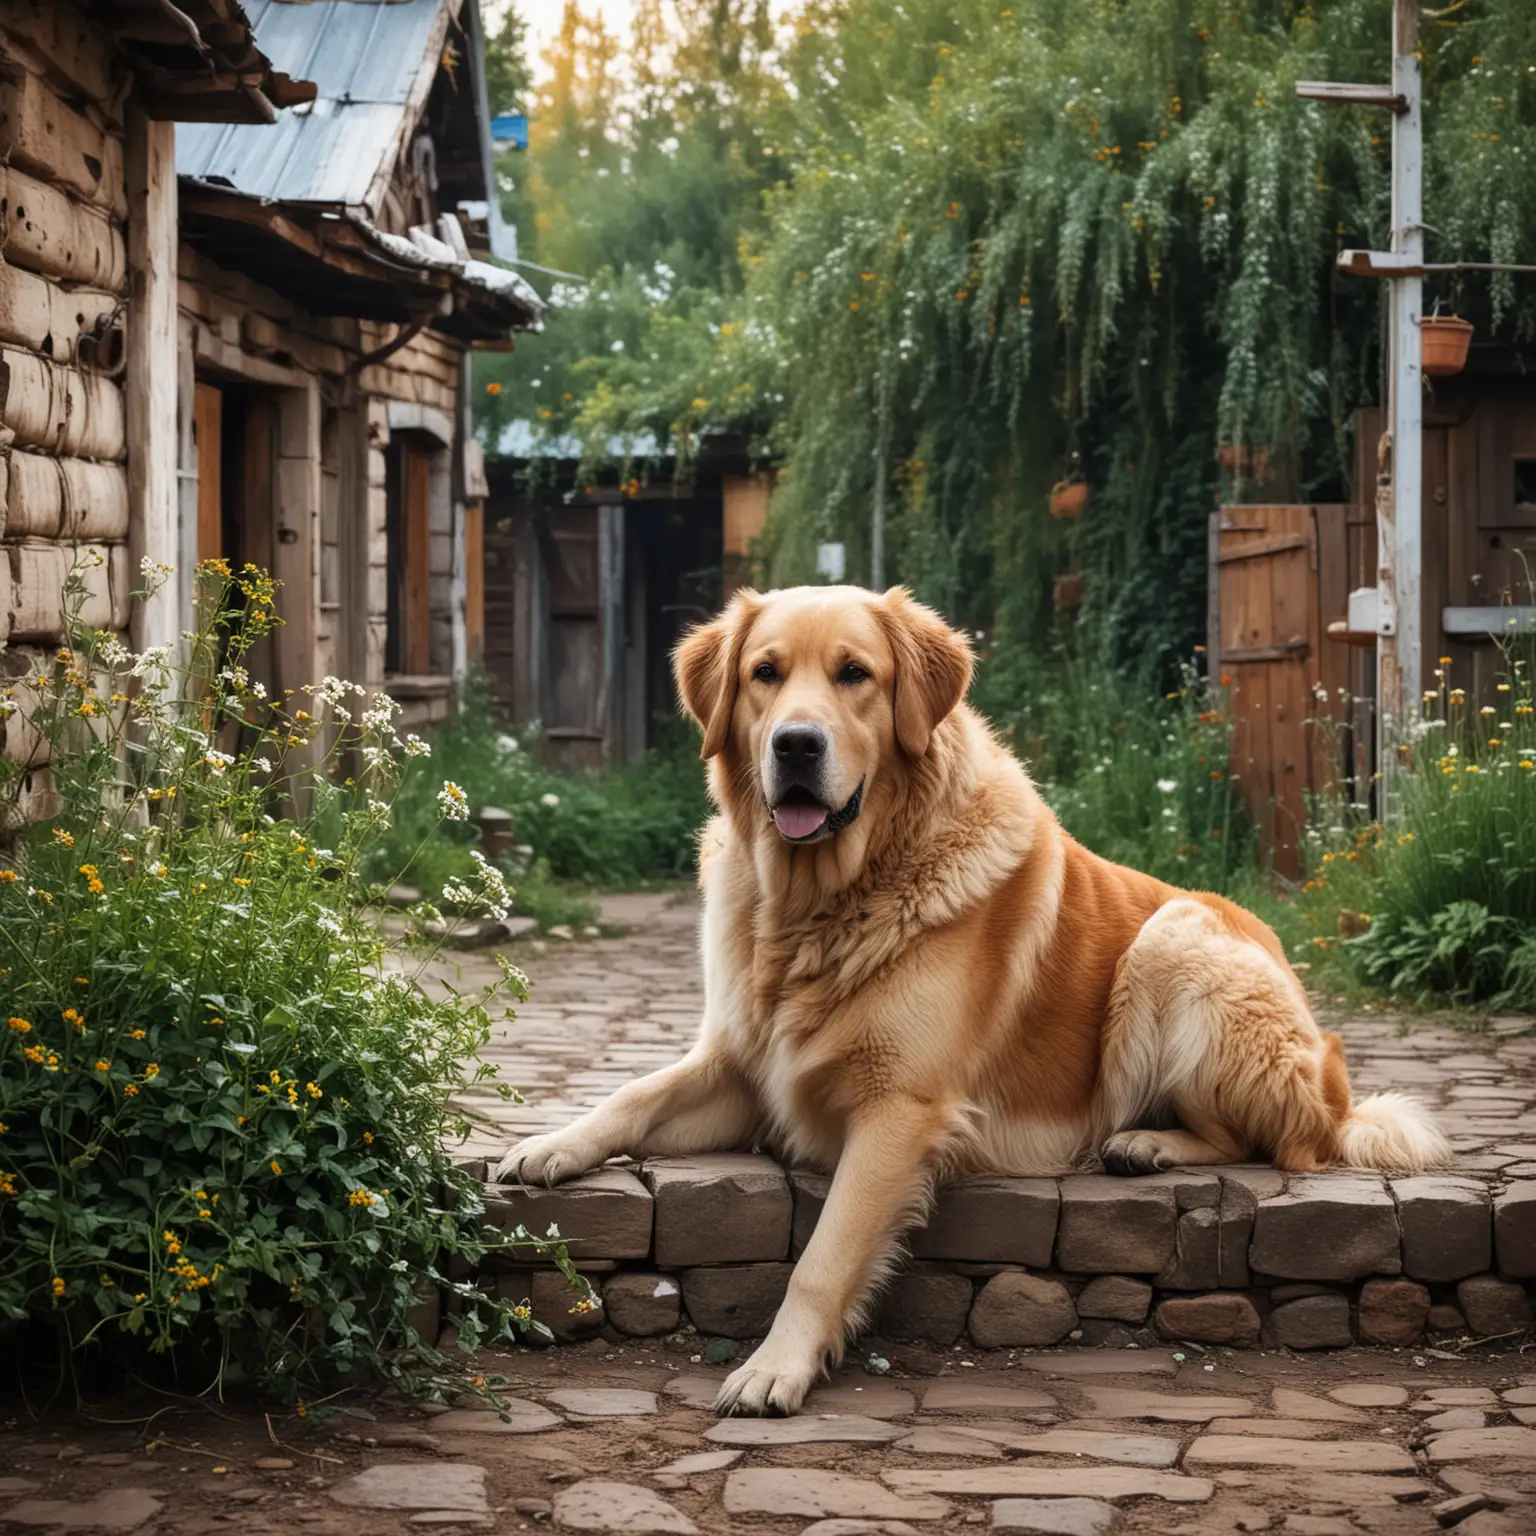 Loyal-Dog-Awaits-Owner-in-Serene-Russian-Village-Courtyard